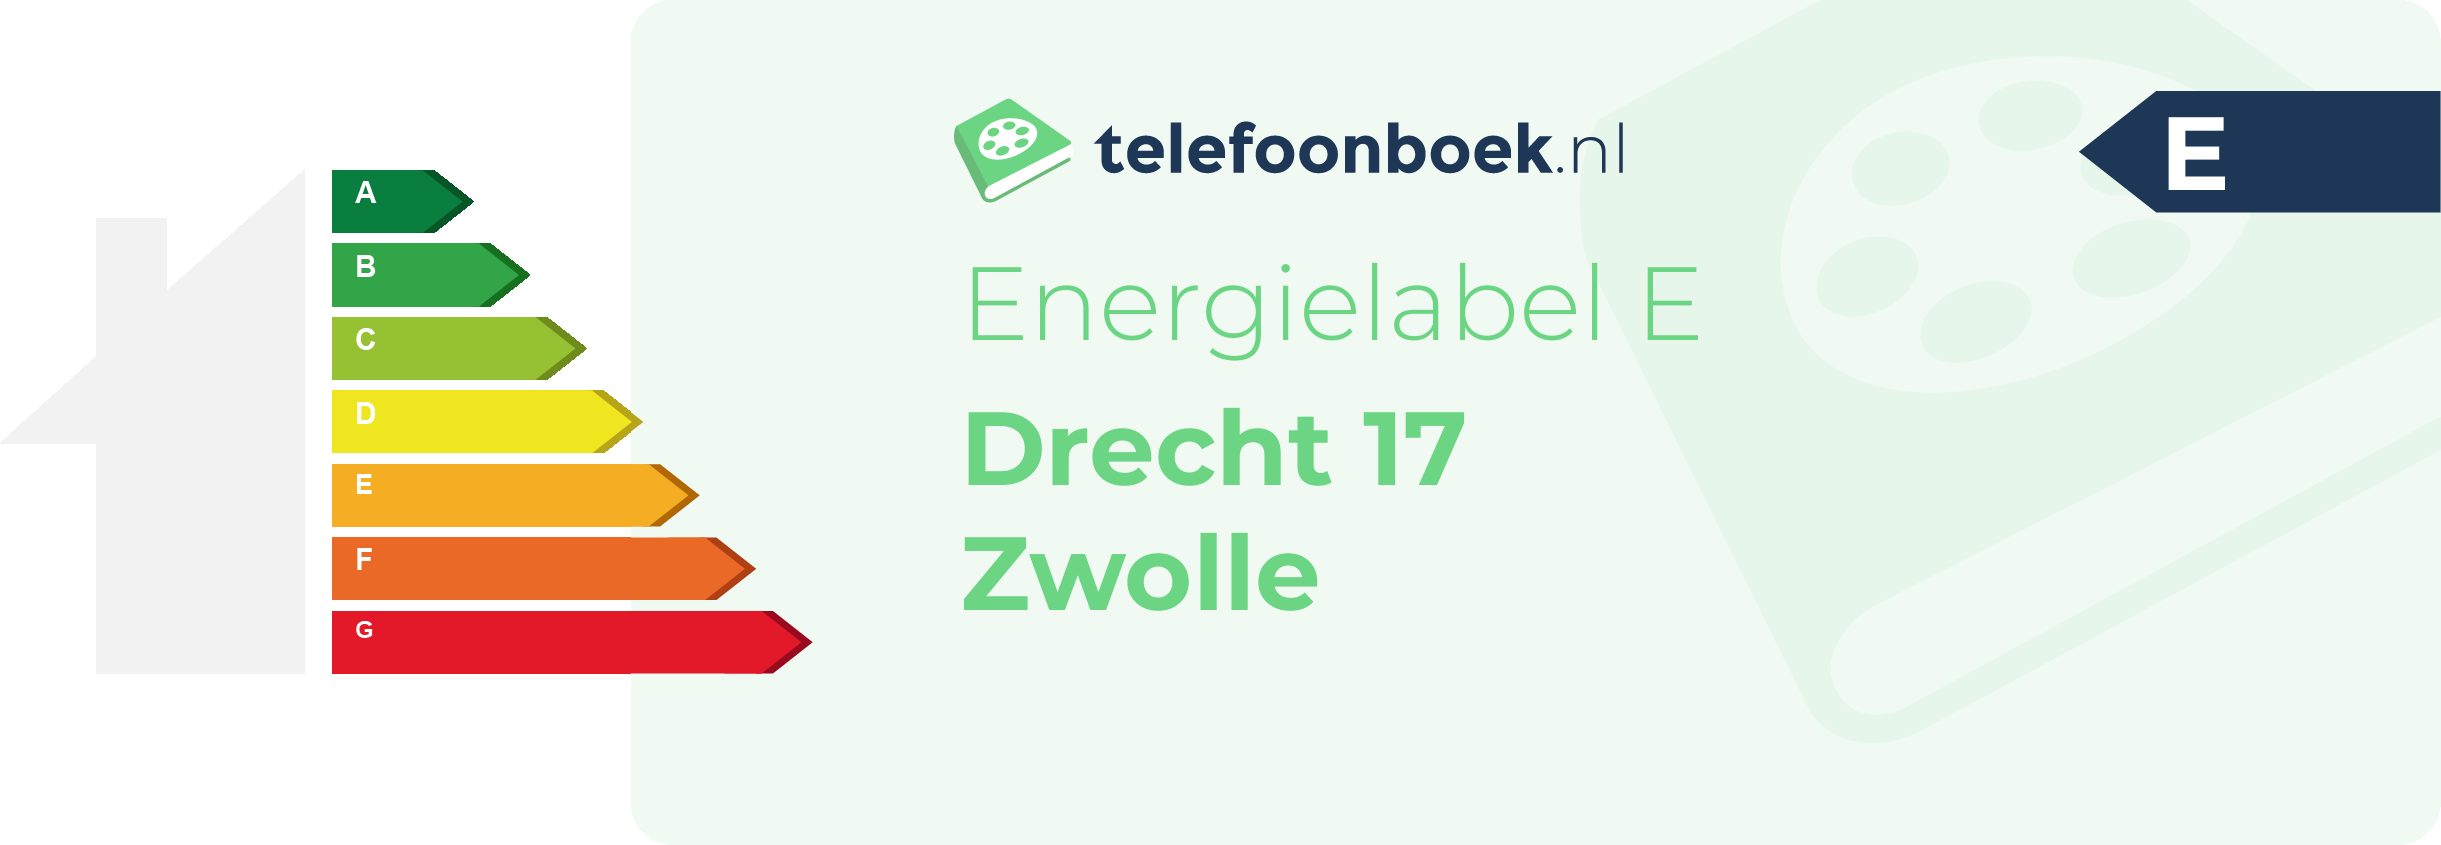 Energielabel Drecht 17 Zwolle